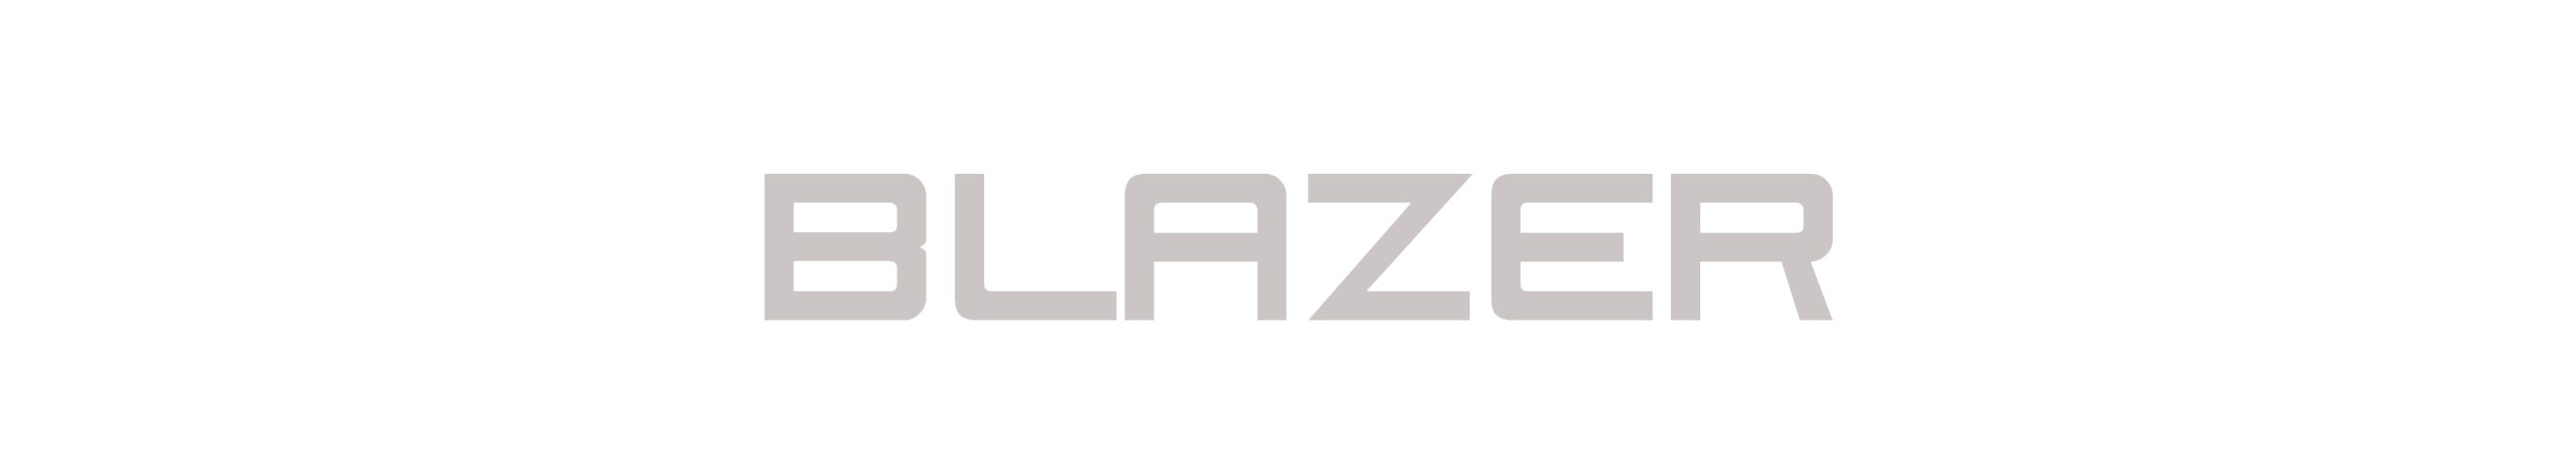 blazertech logo